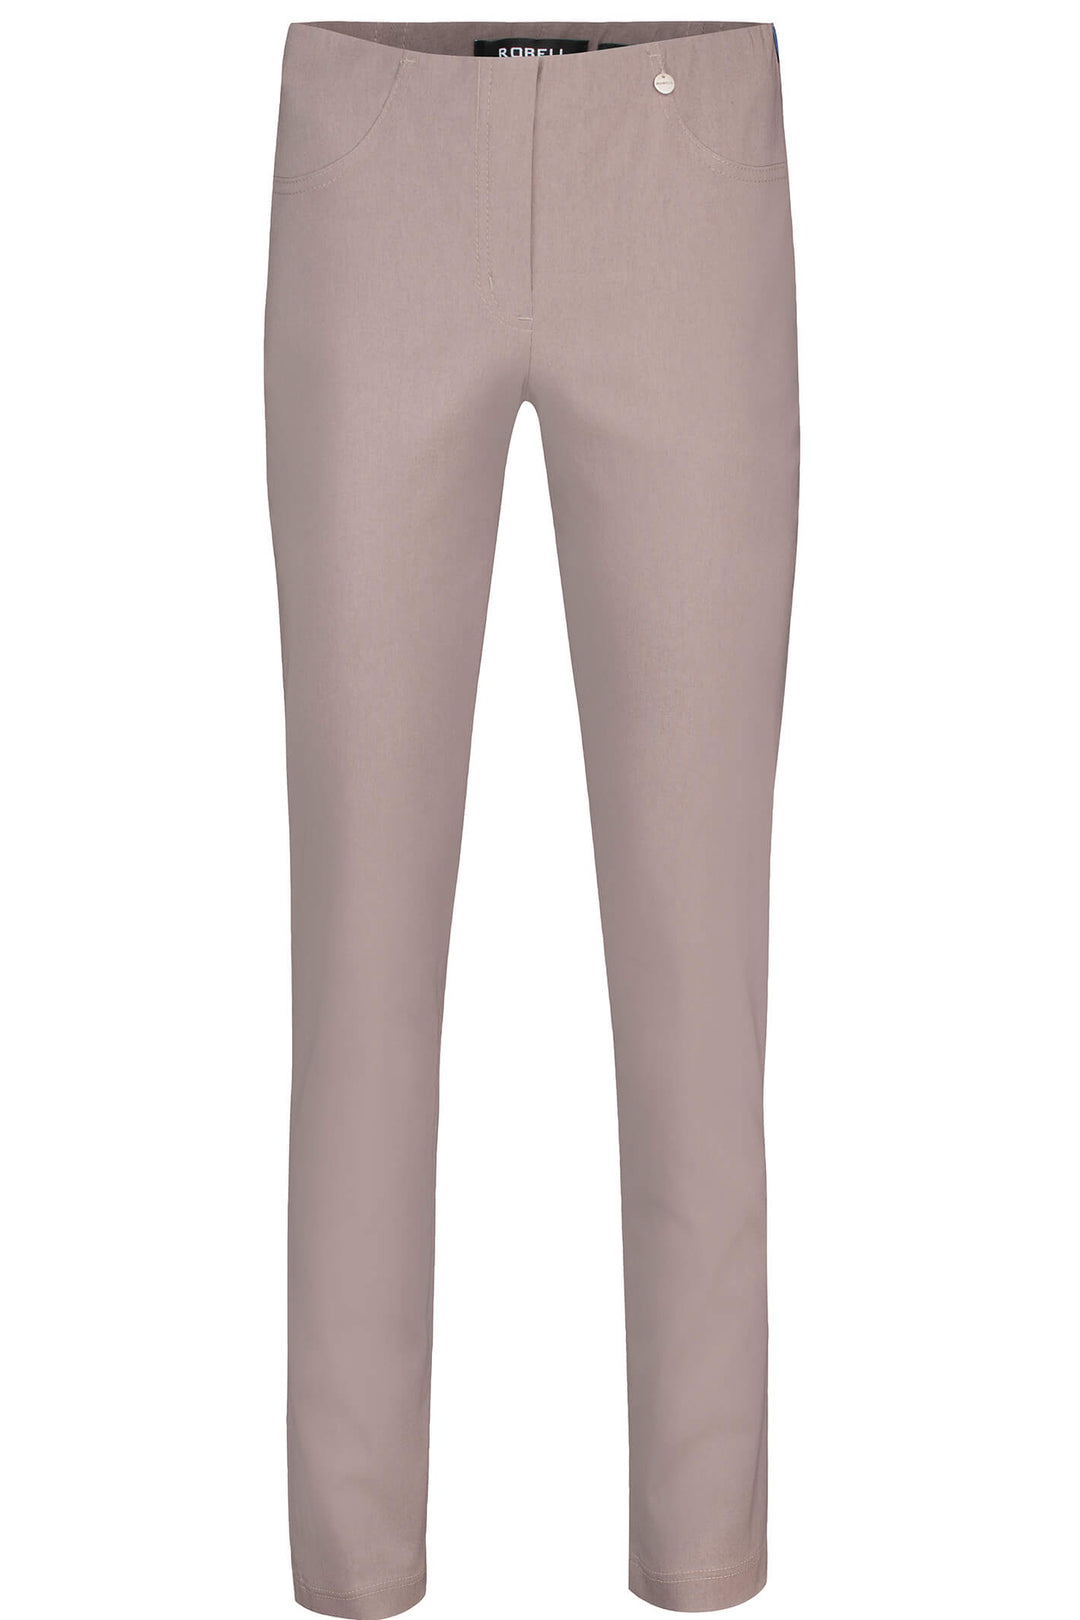 Robell 51559-5499-38 Bella K Almond Petite Trousers (Short 73cm) - Dotique